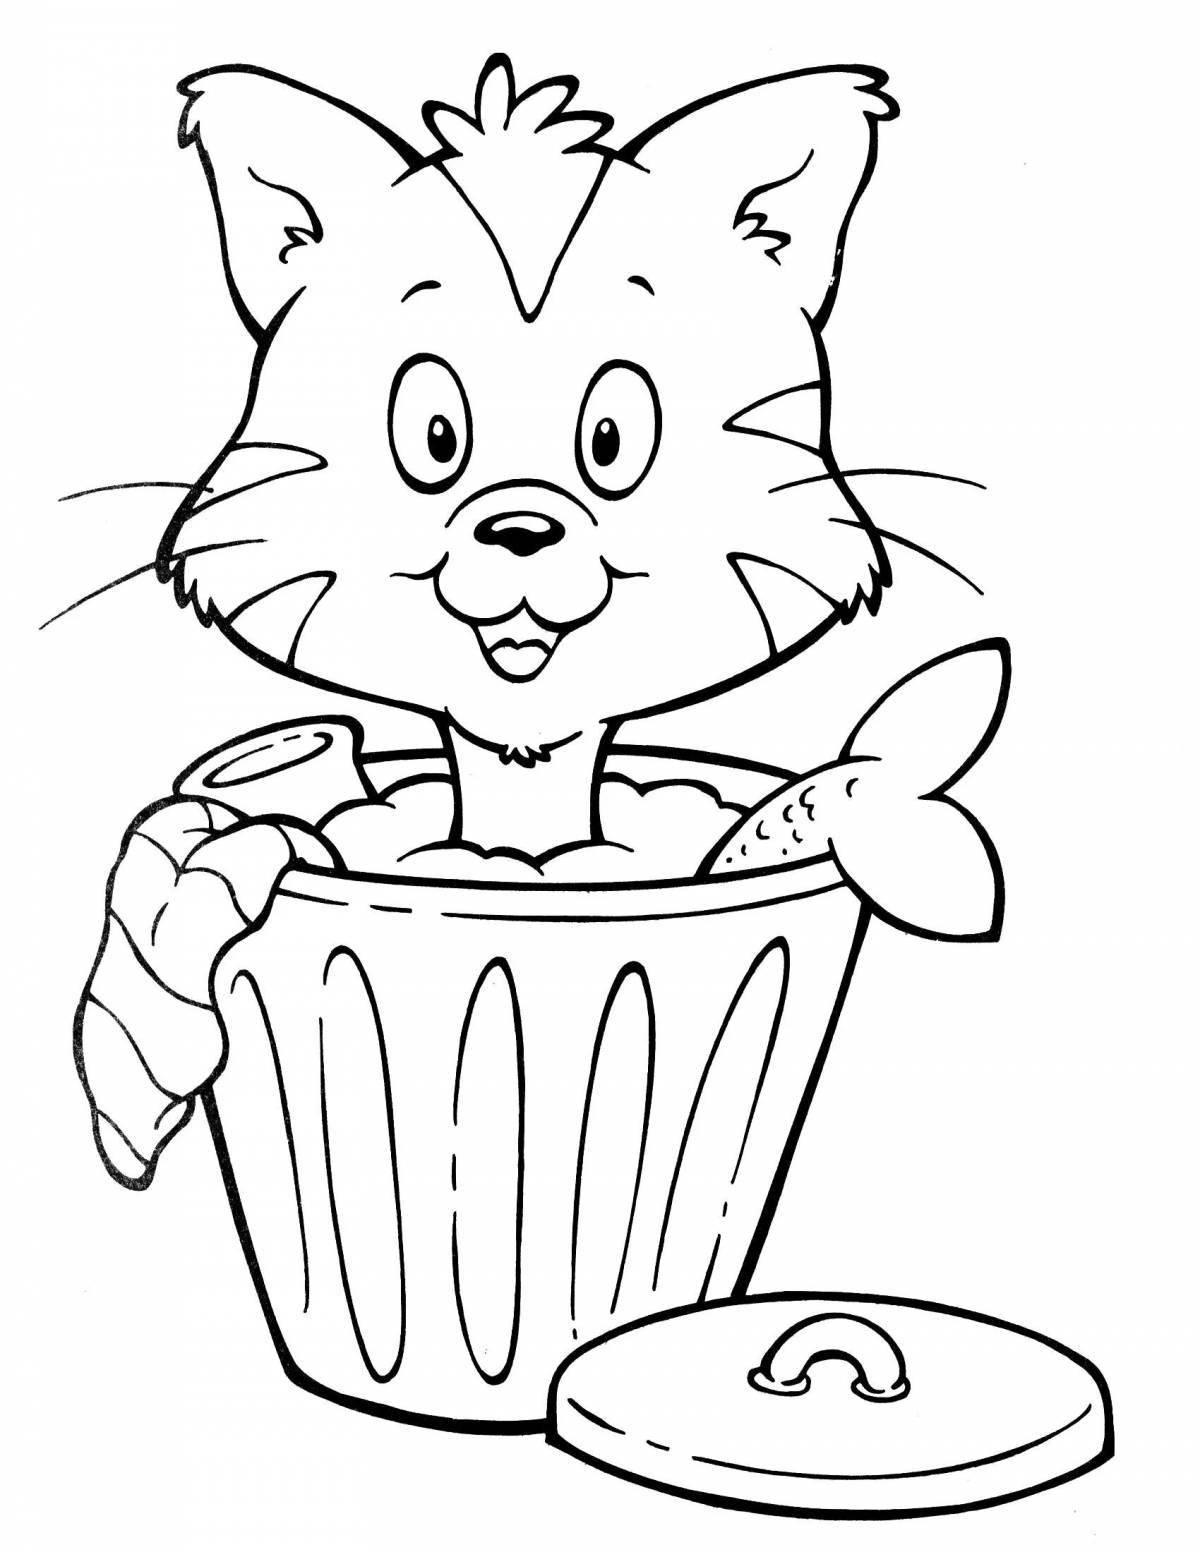 Coloring book playful kitten in a mug